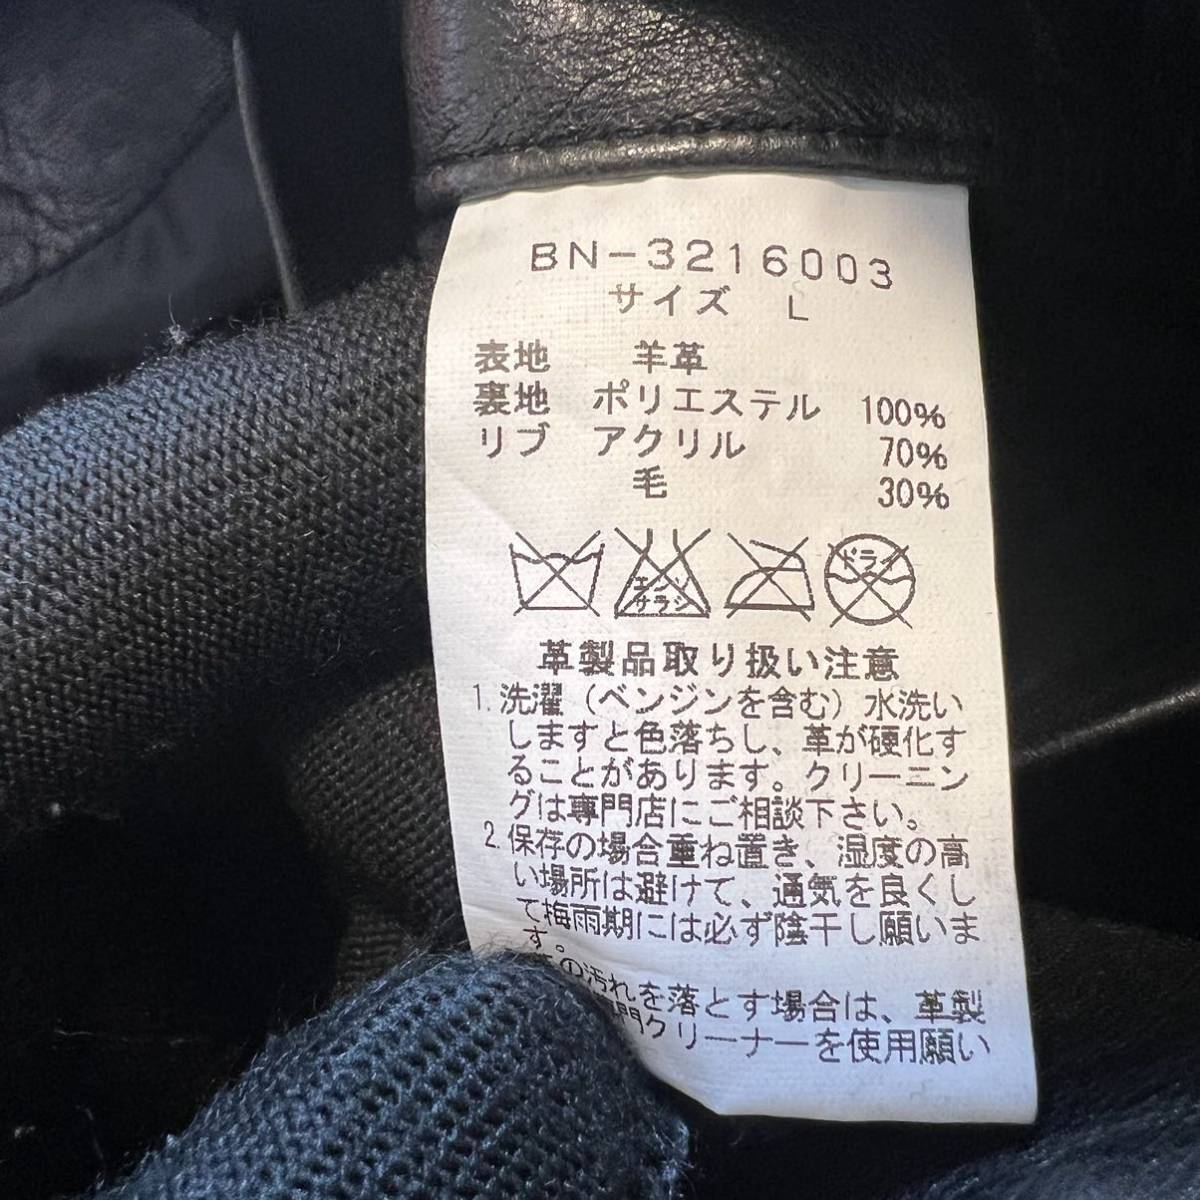 rare 00s Japanese Label Y2K lamb leather jacket 14th addiction share spirit ifsixwasnine ekam kmrii archive obelisk lgb goa 90s_画像5